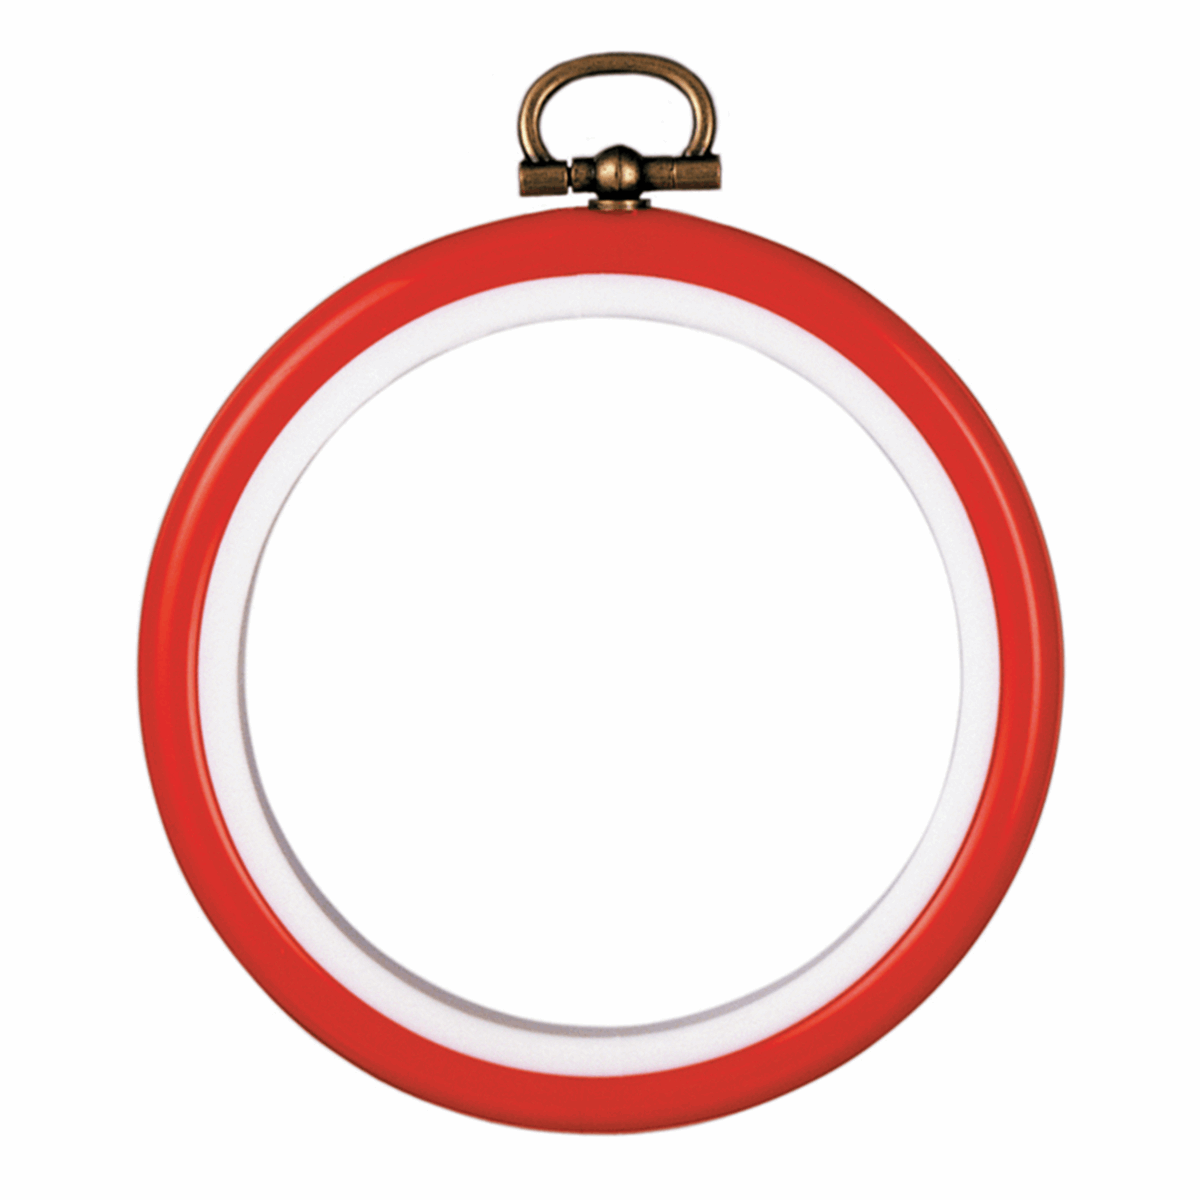 Vervaco Red Circular Frame - 7.5cm Diameter